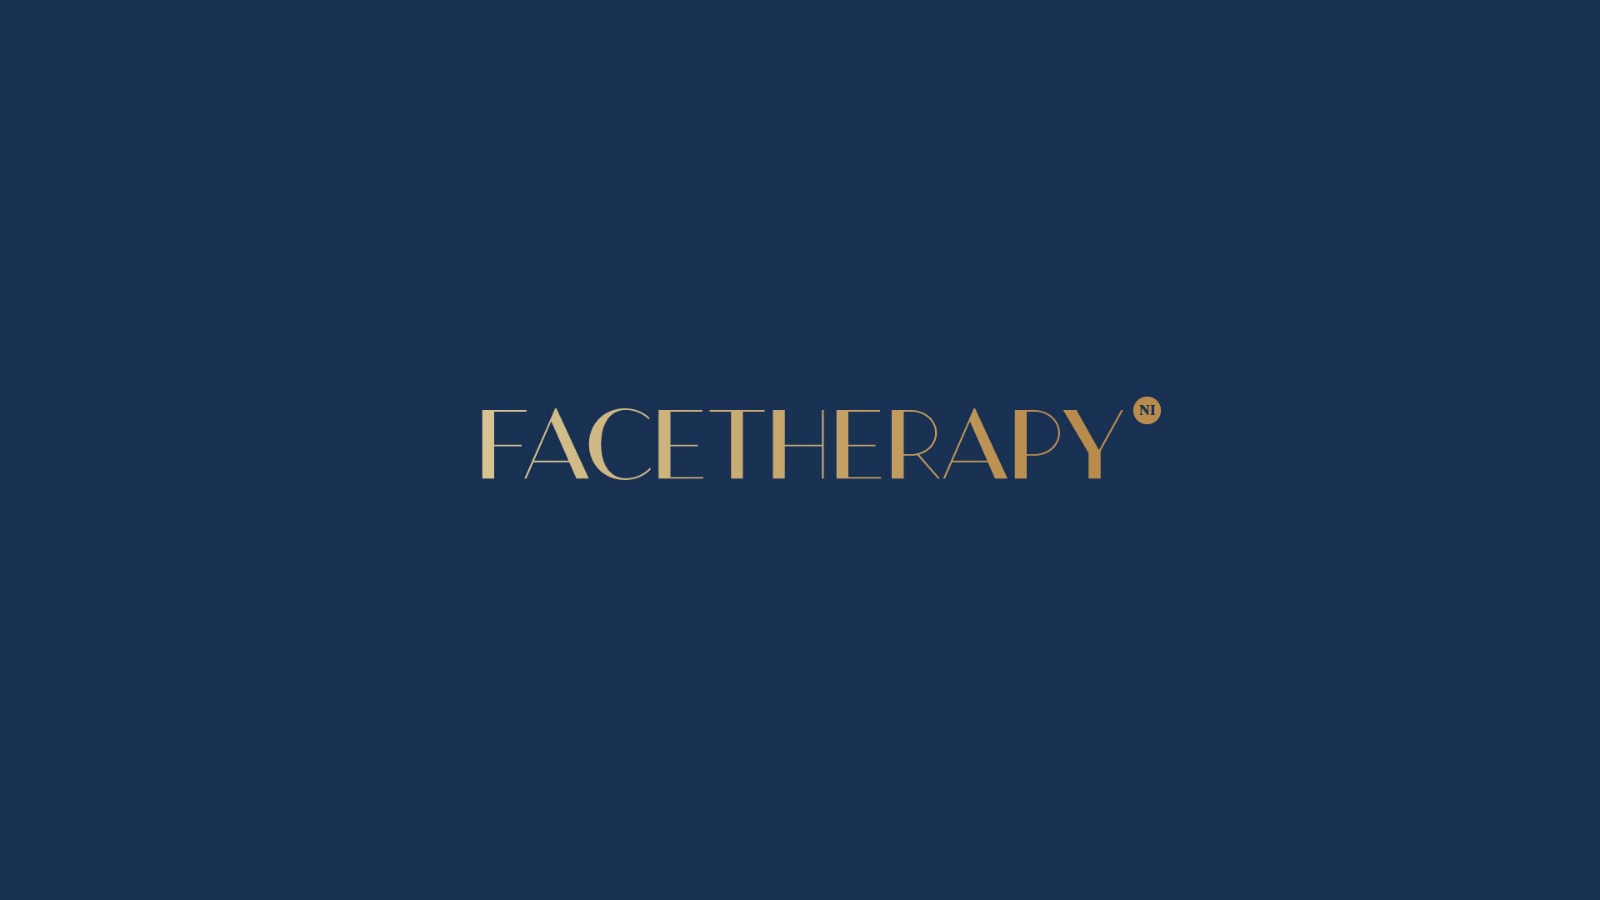 FacetherapyNI